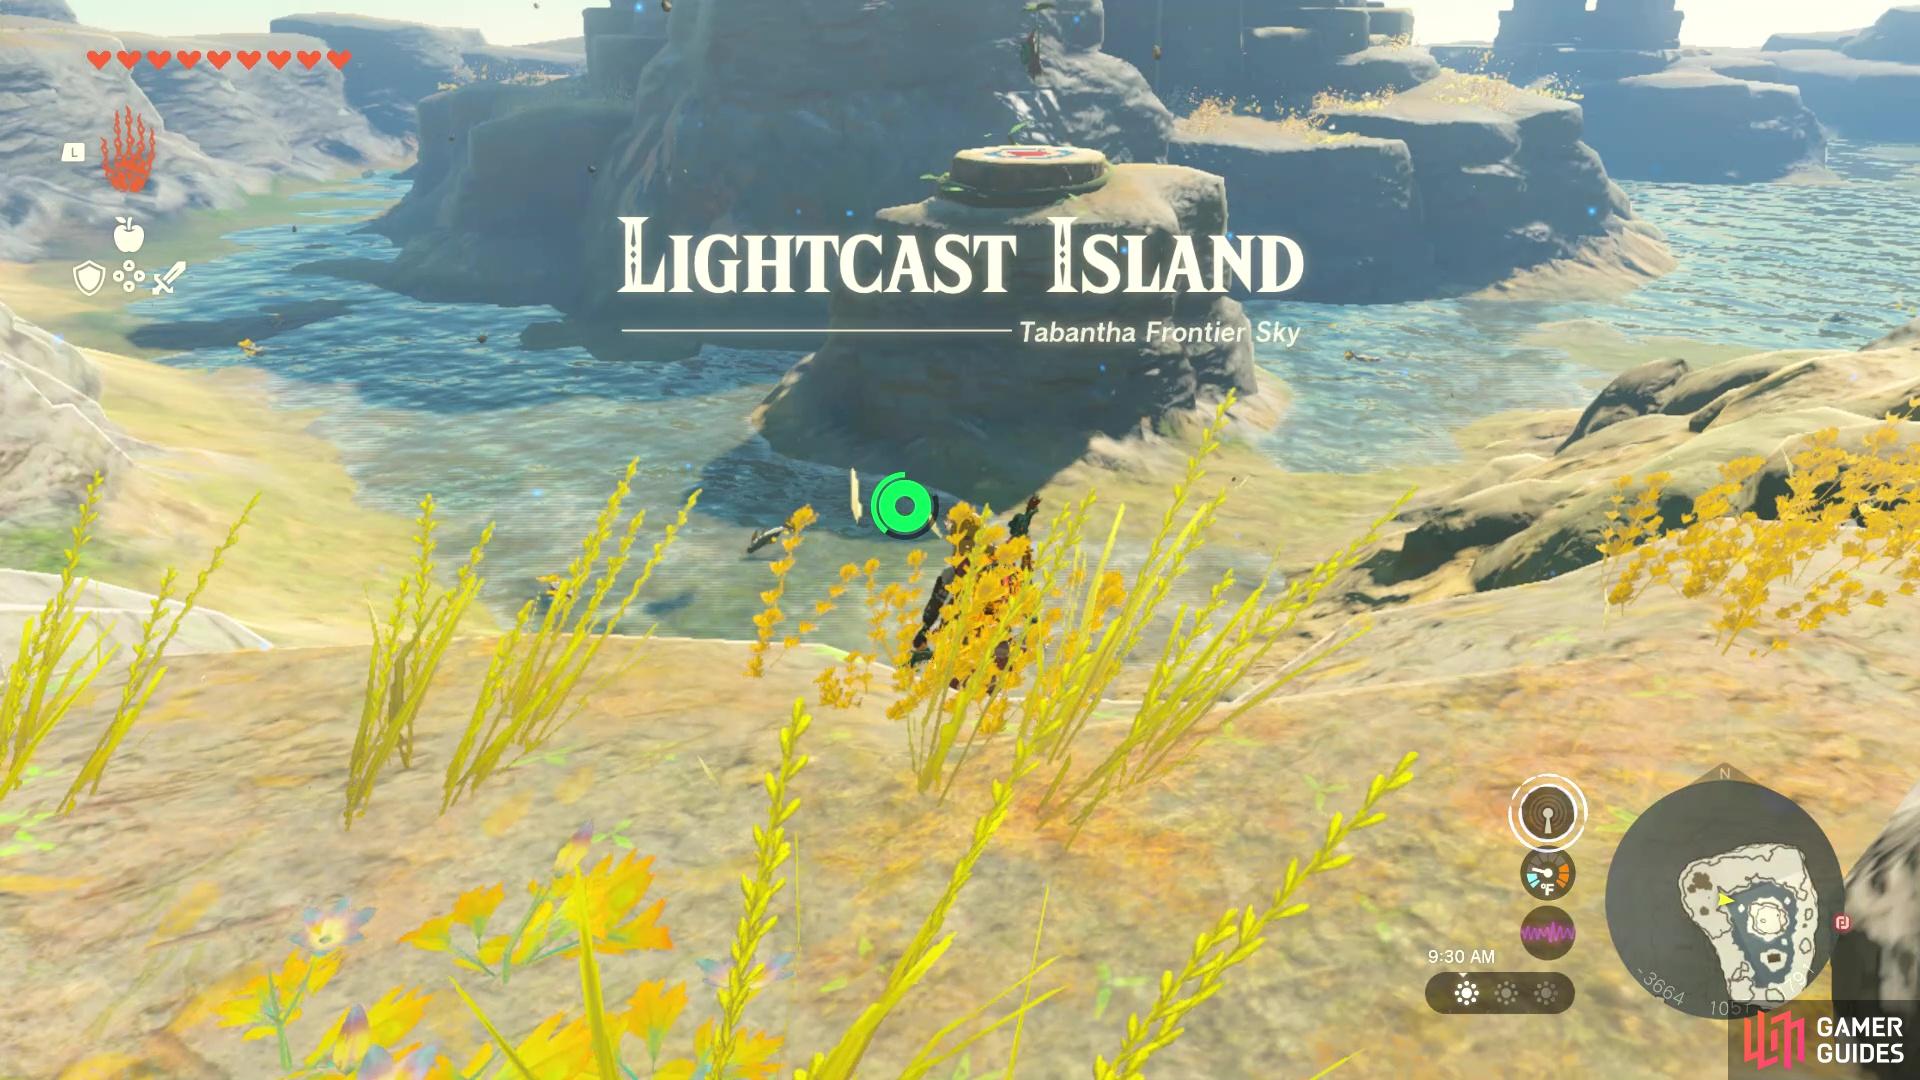 Lightcast Island is where you’ll find the Ga-ahisas Shrine.